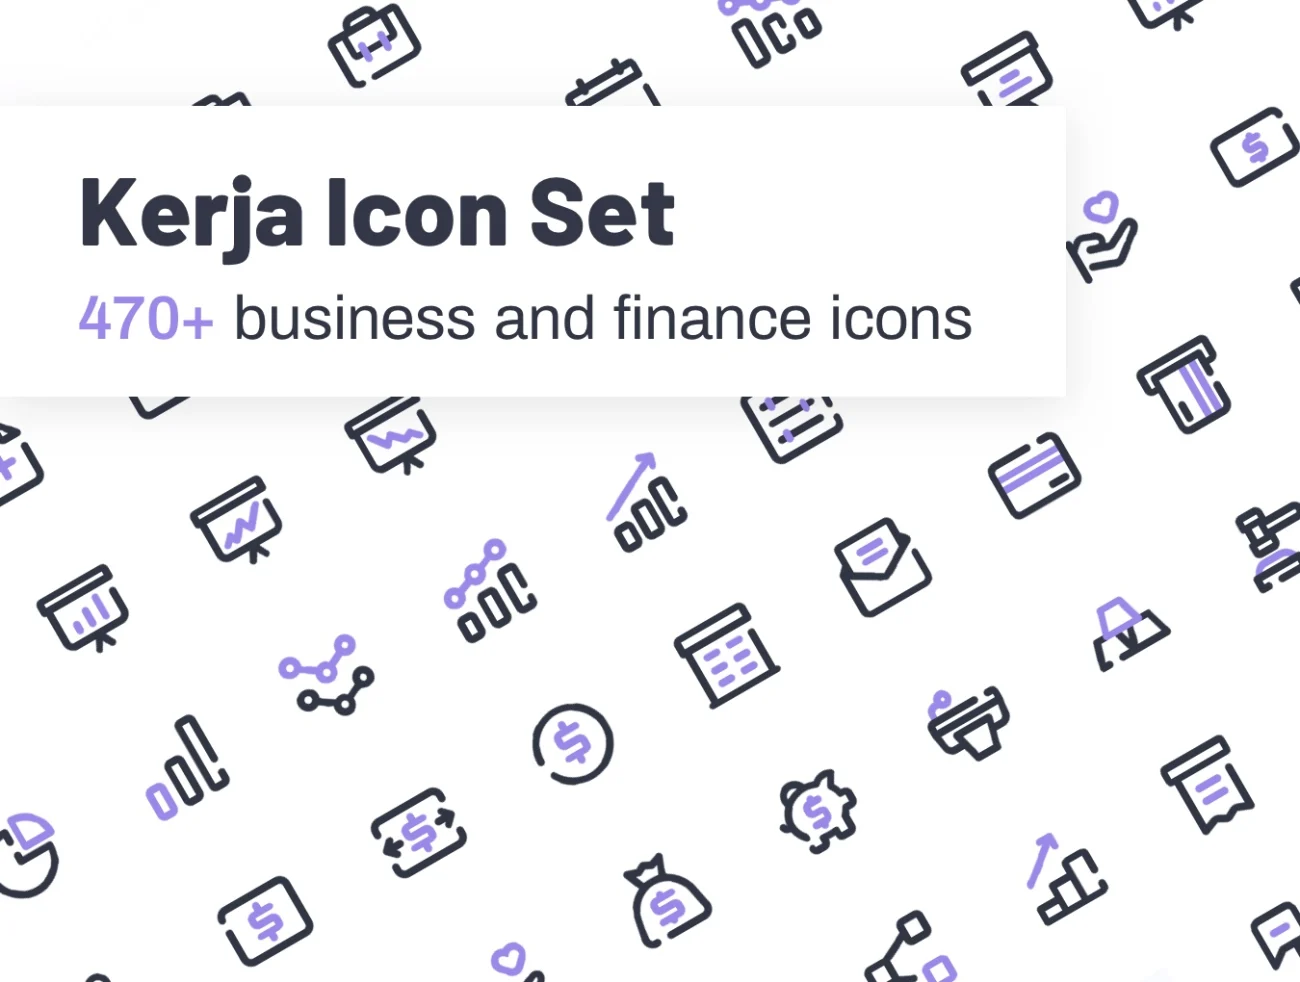 Kerja - Business and Finance Icon Set 470款商业和金融图标集-3D/图标-到位啦UI